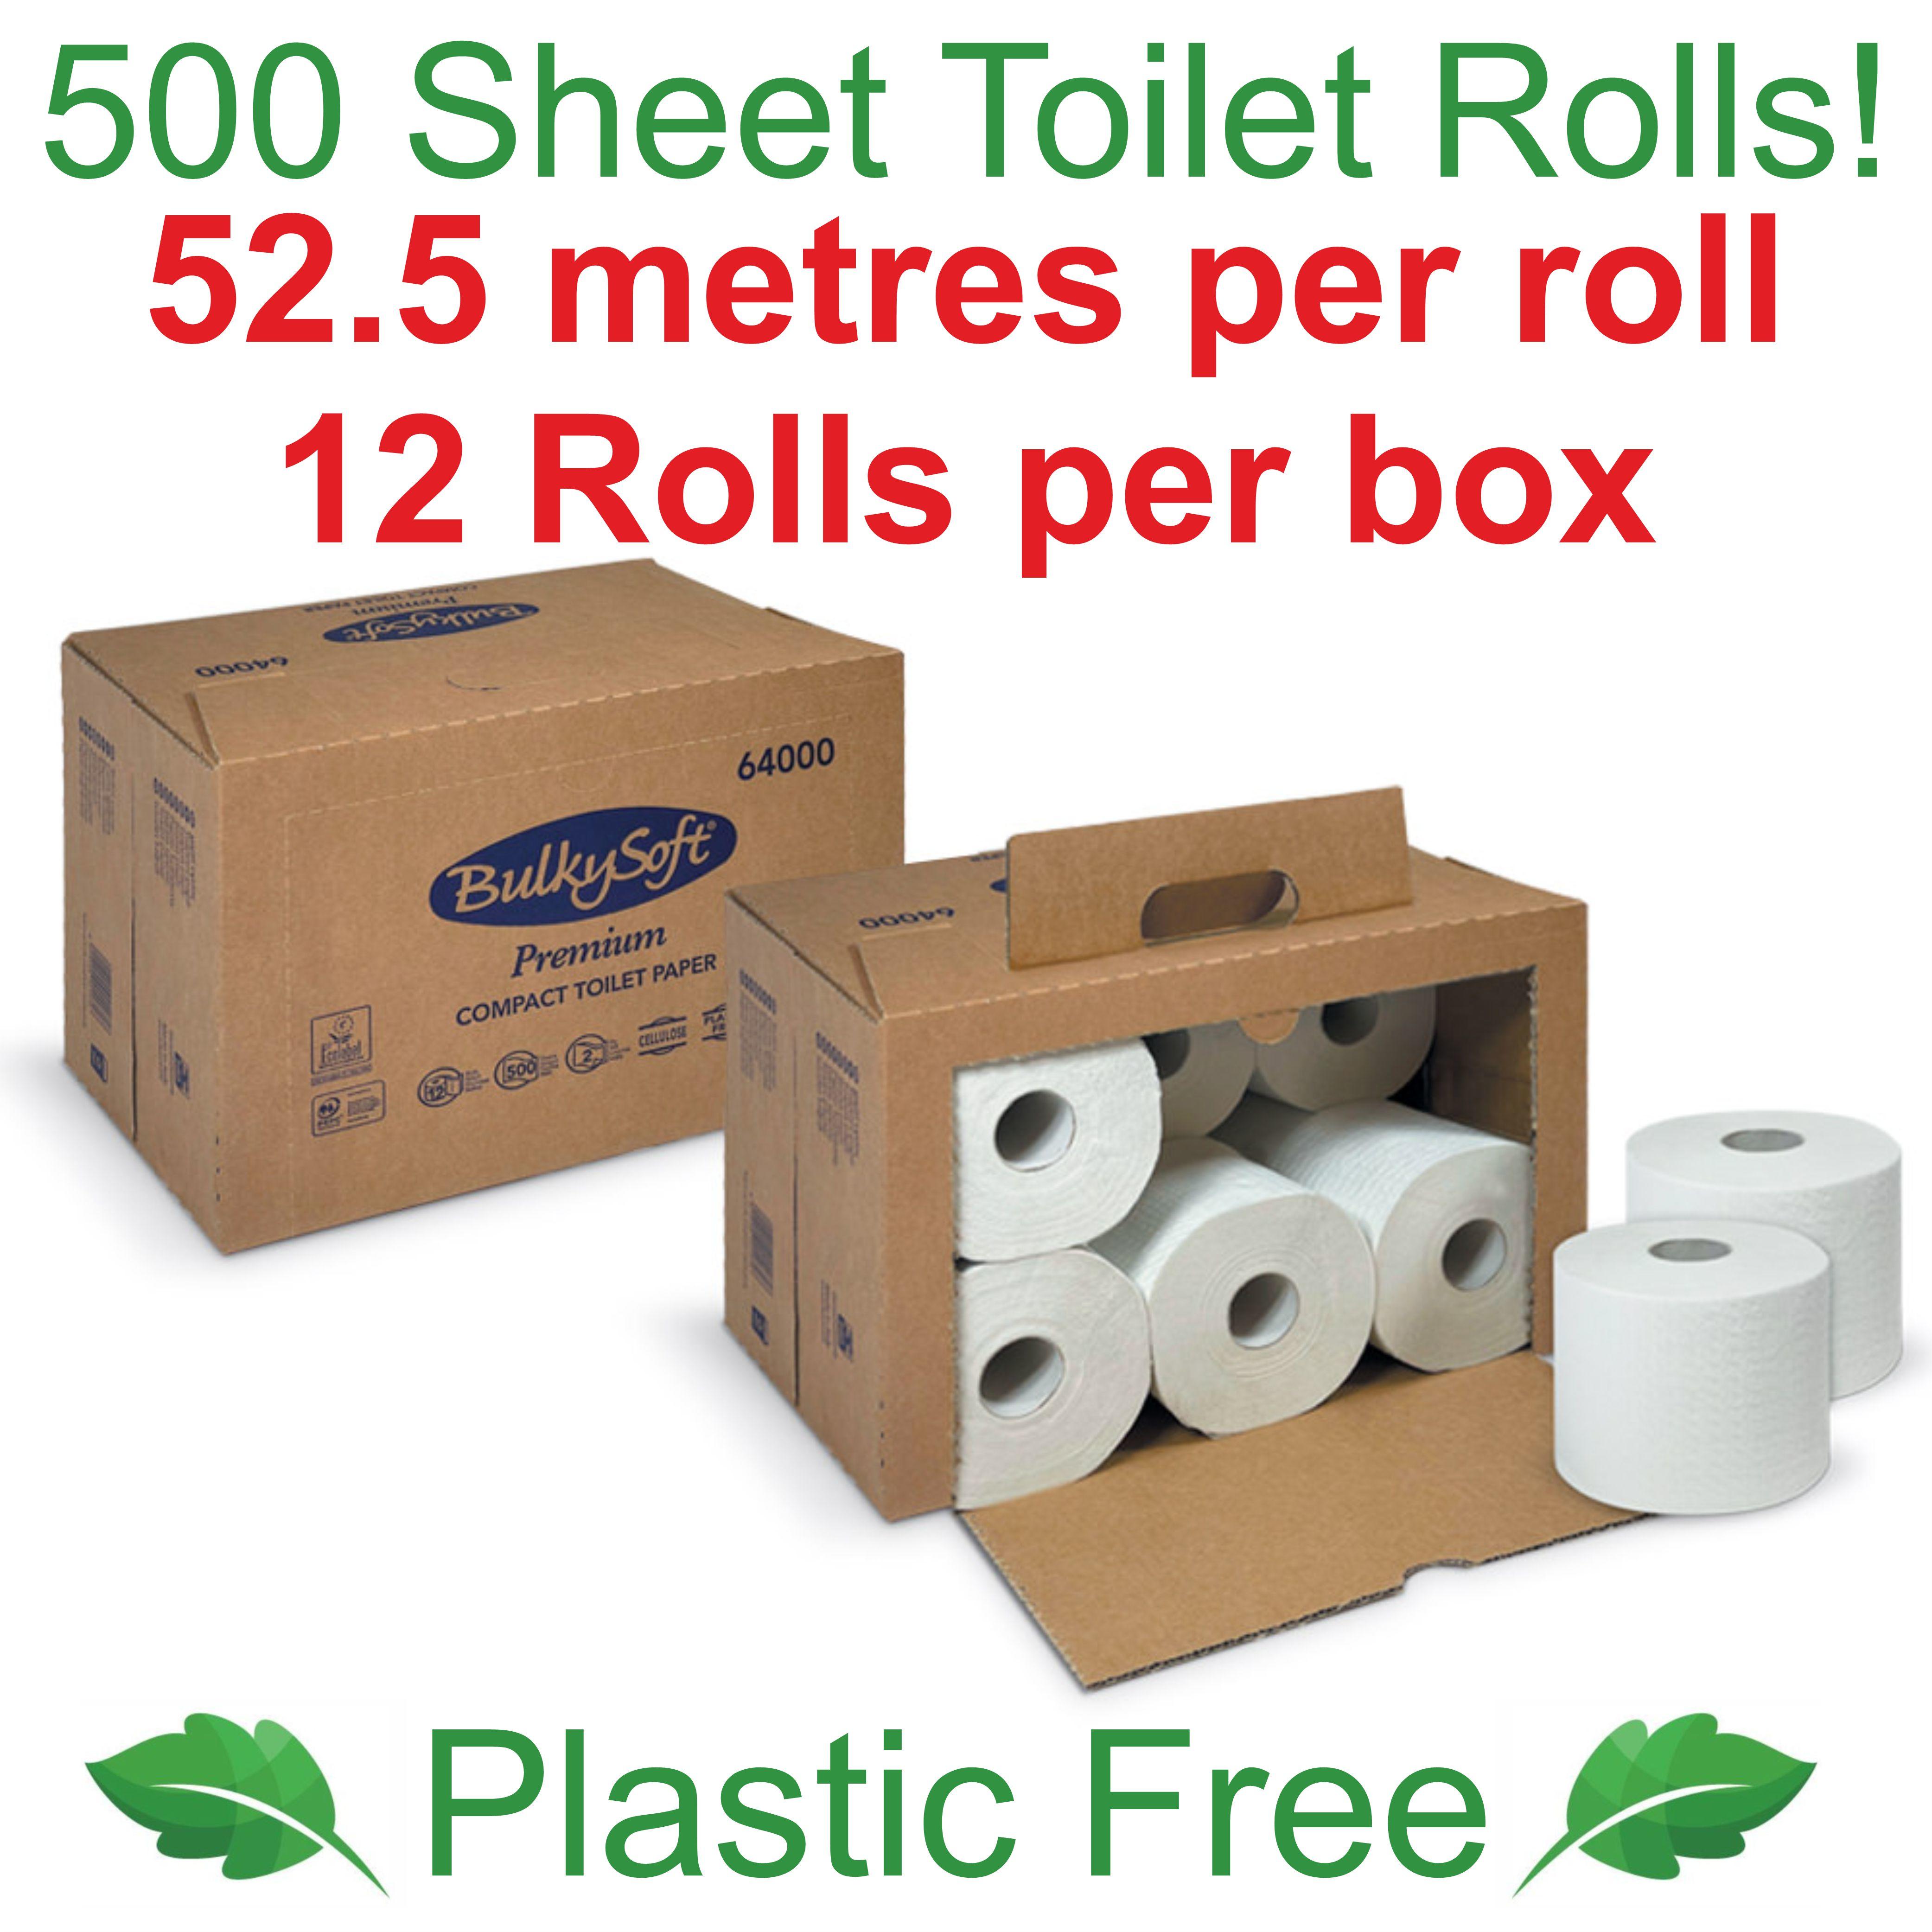 Sustainable Toilet Paper UK, Toilet Roll